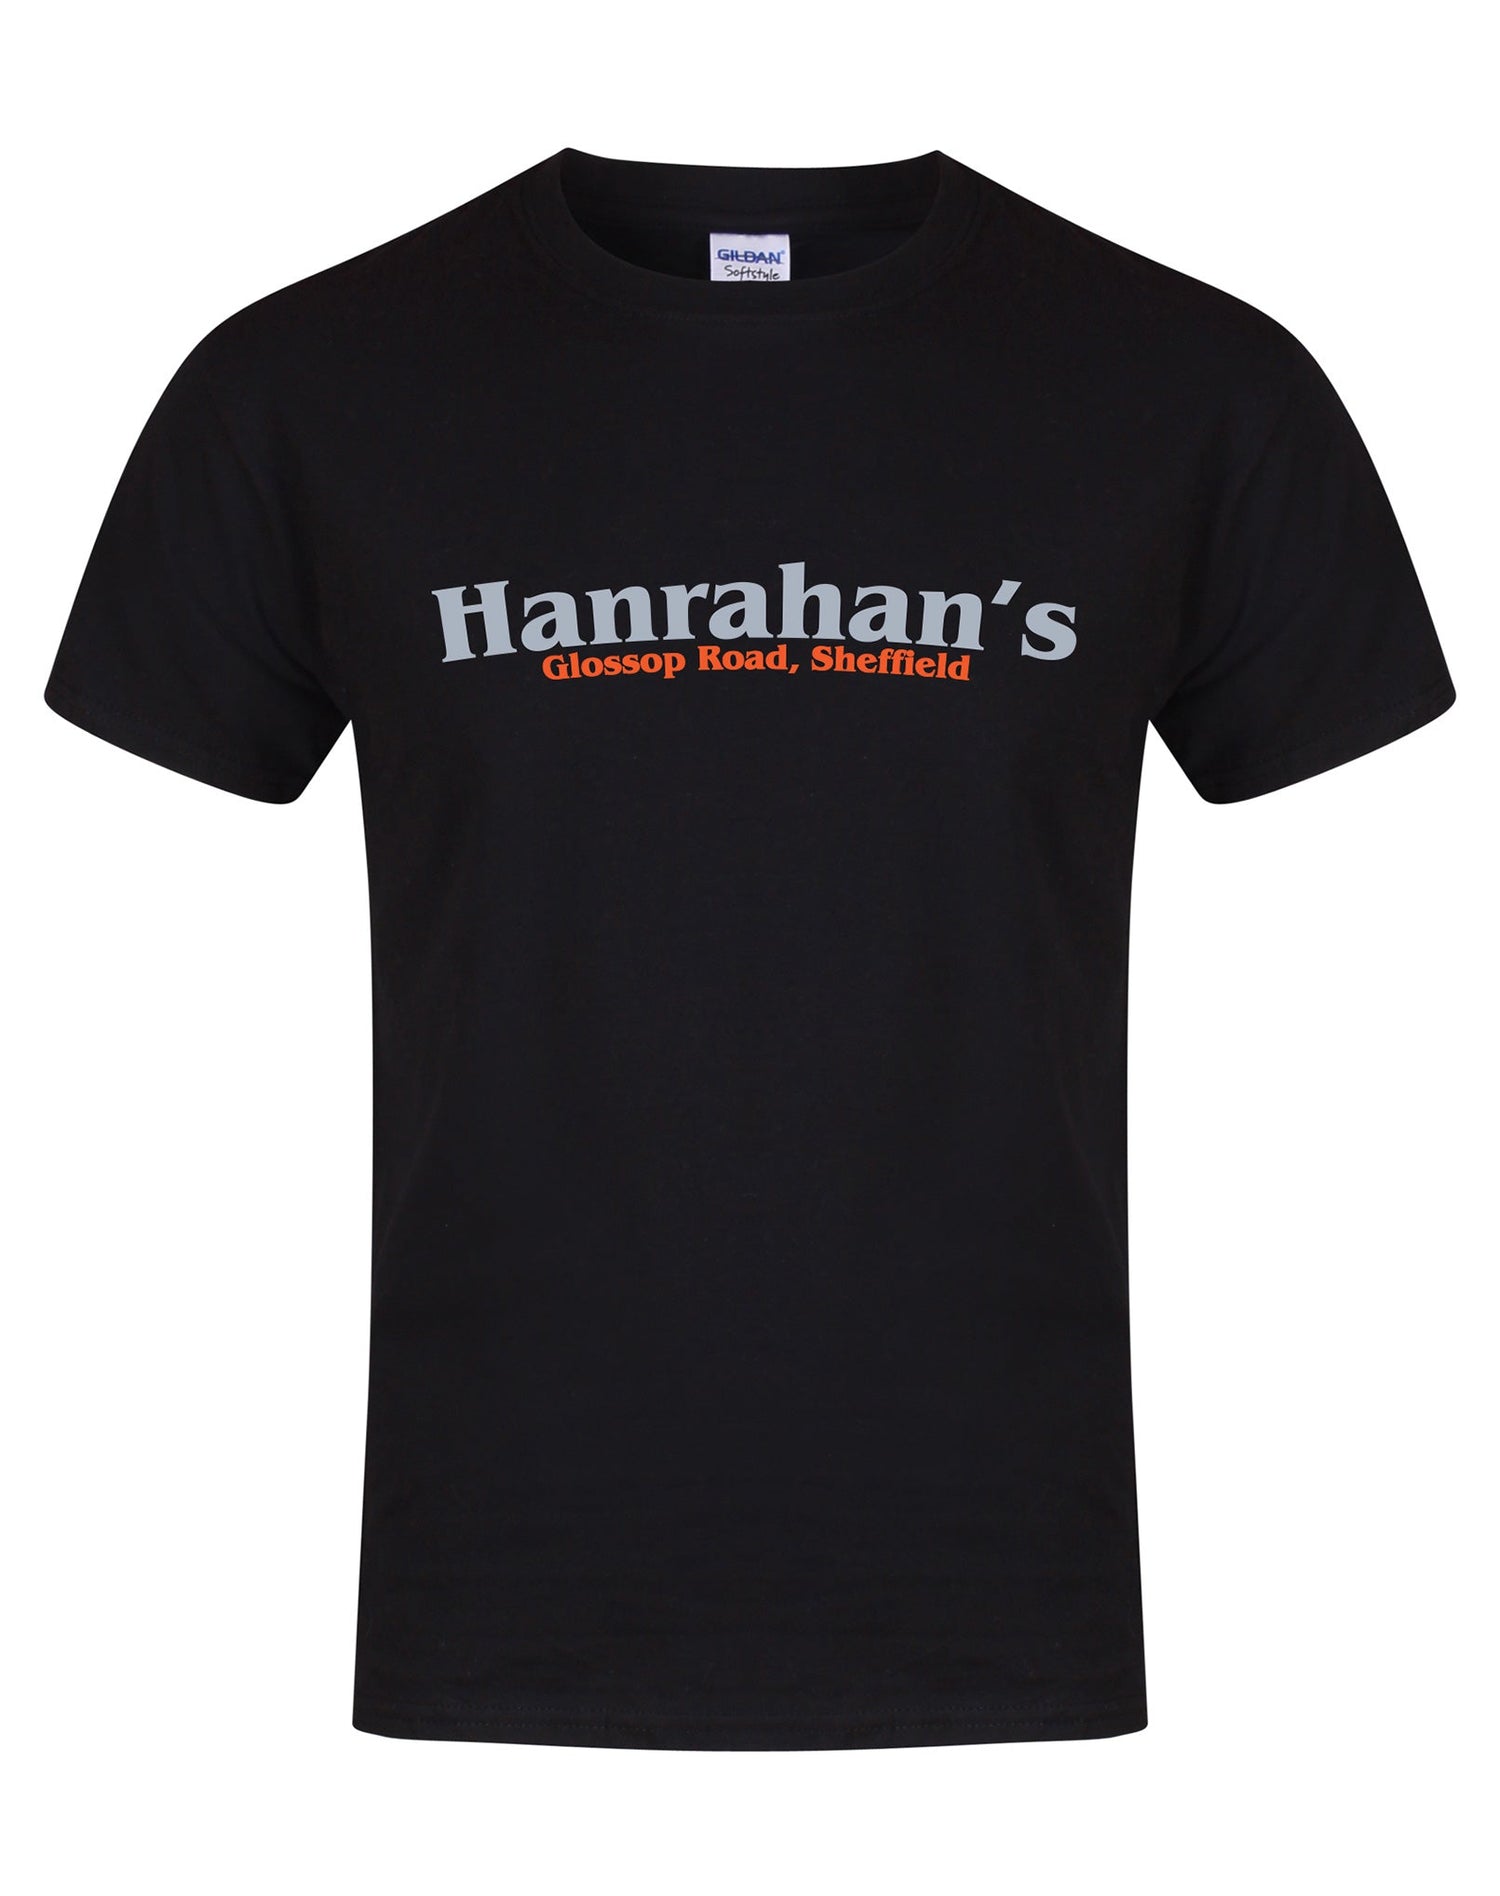 Hanrahan's